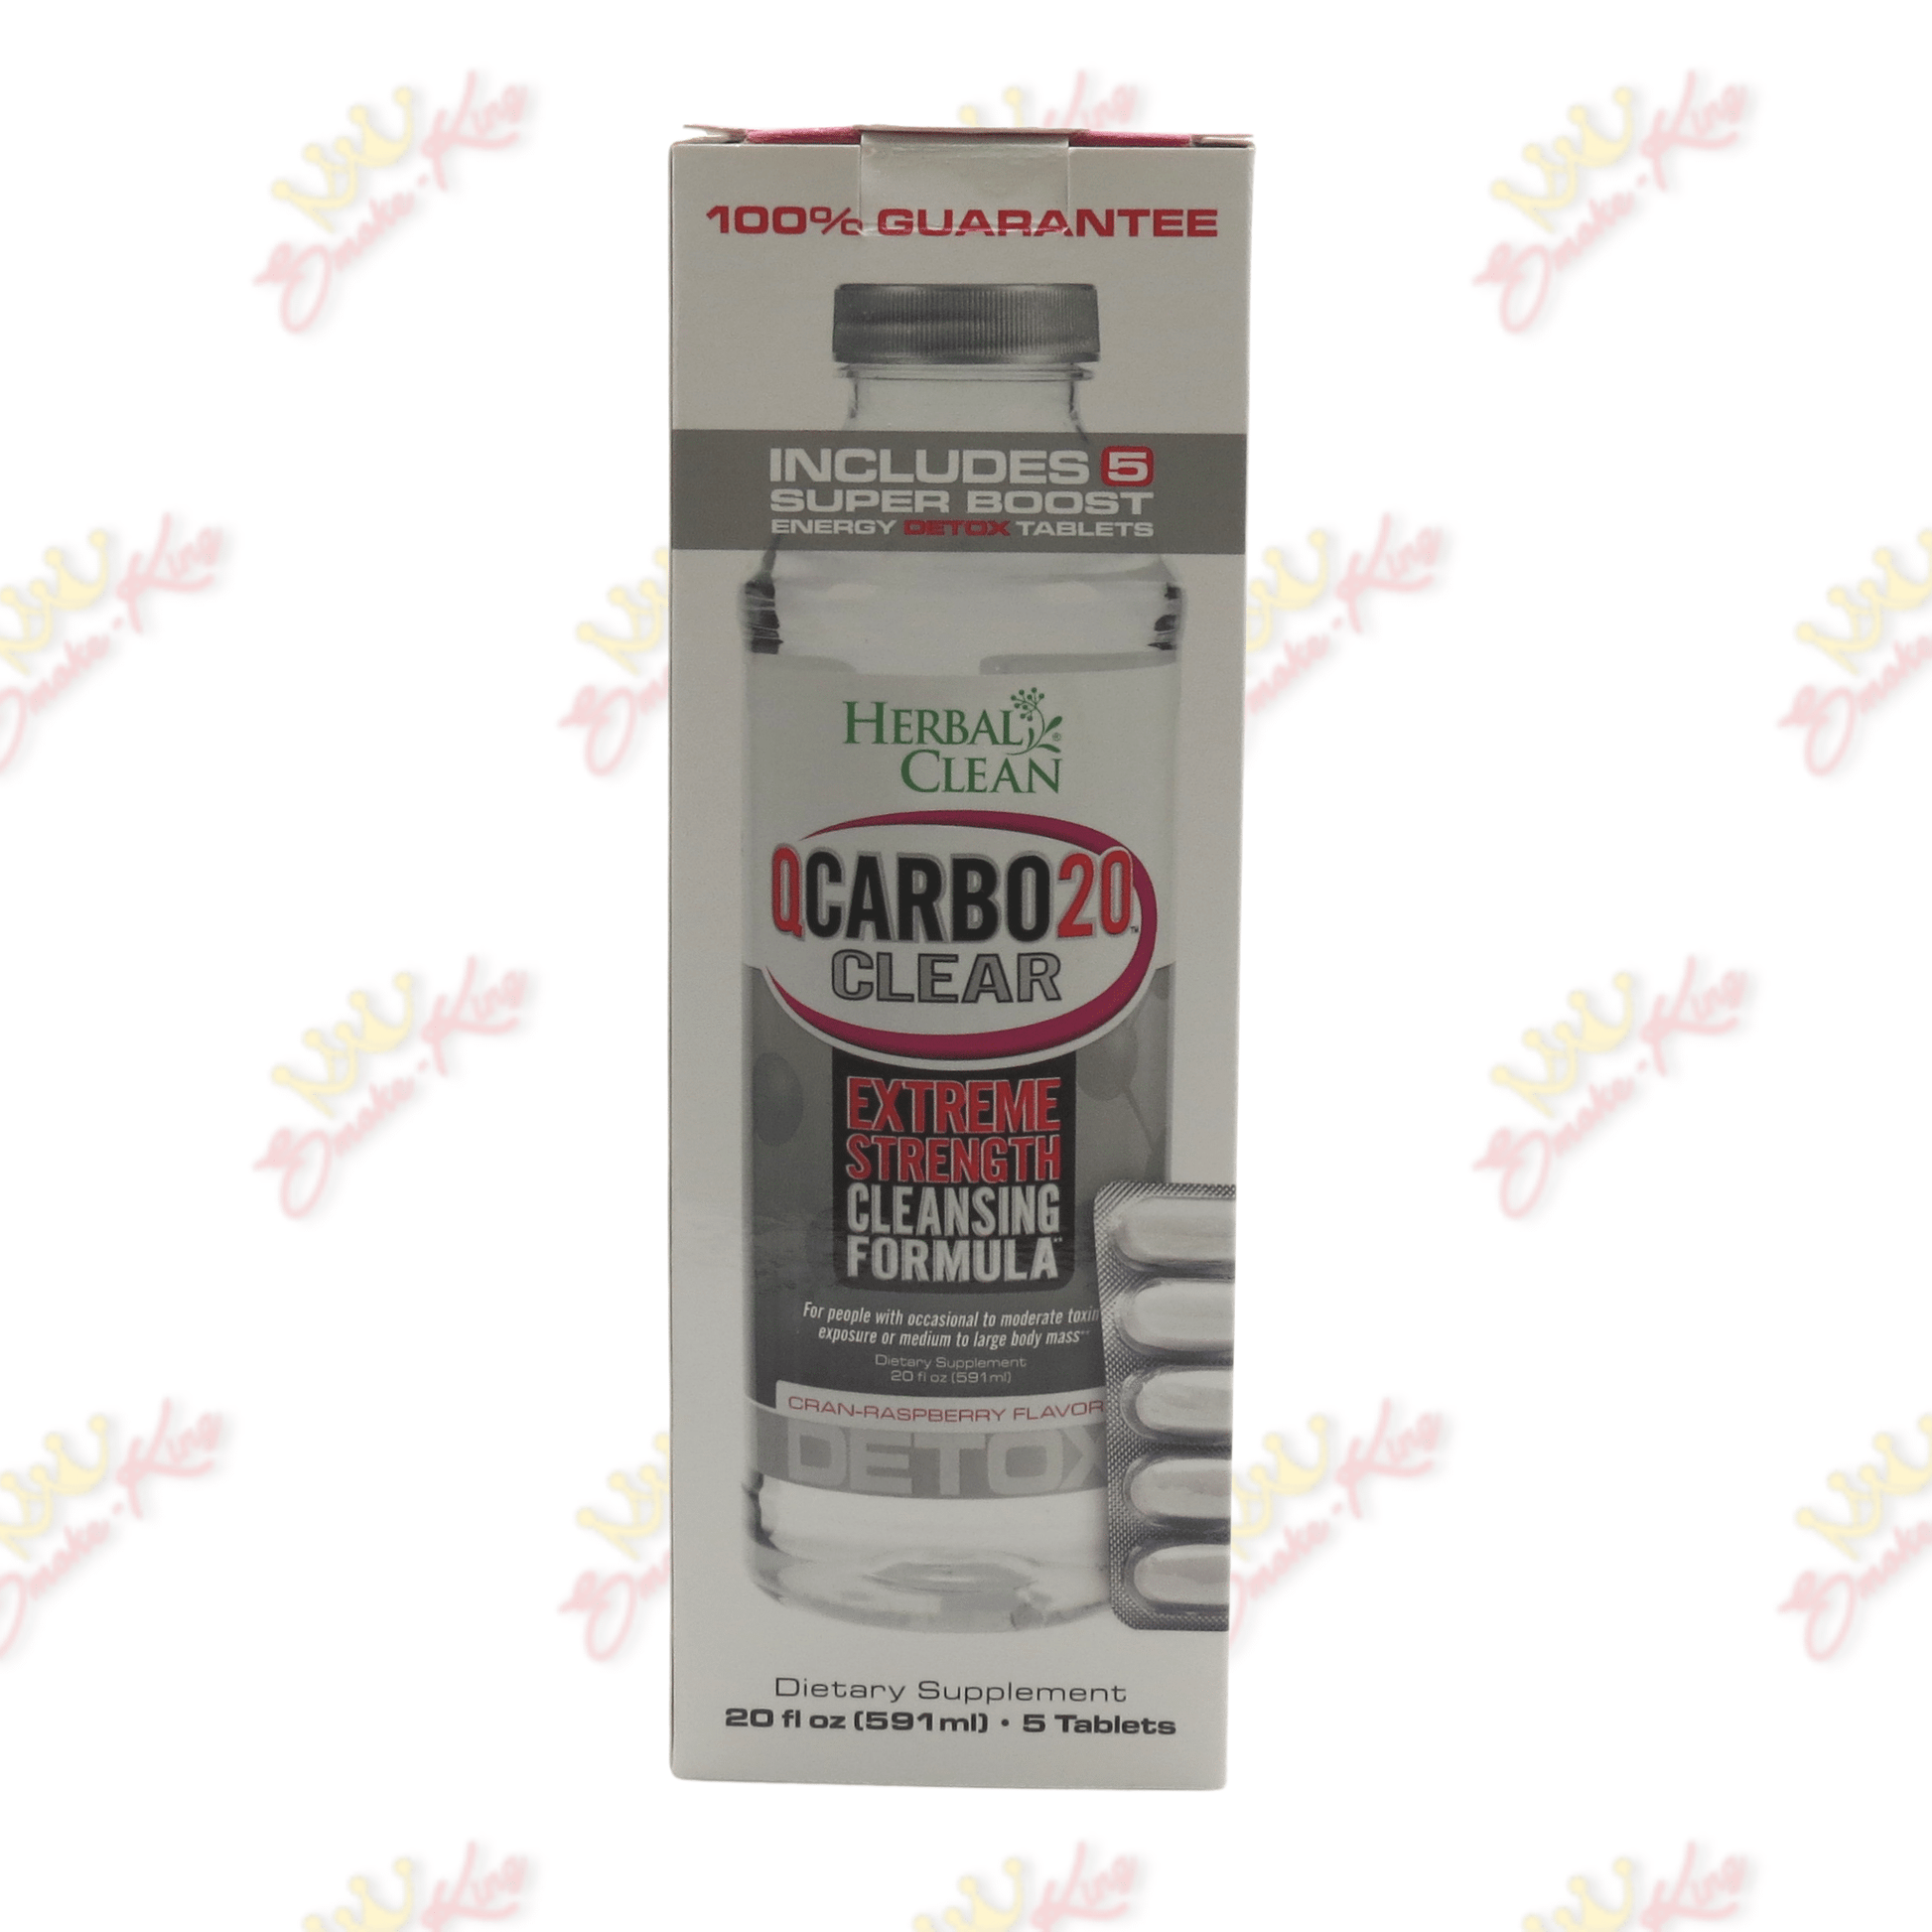 Herbal Clean Herbal Clean QCarbo 20 Clear Herbal Clean QCarbo 20 Clear | Detox | Smoke King